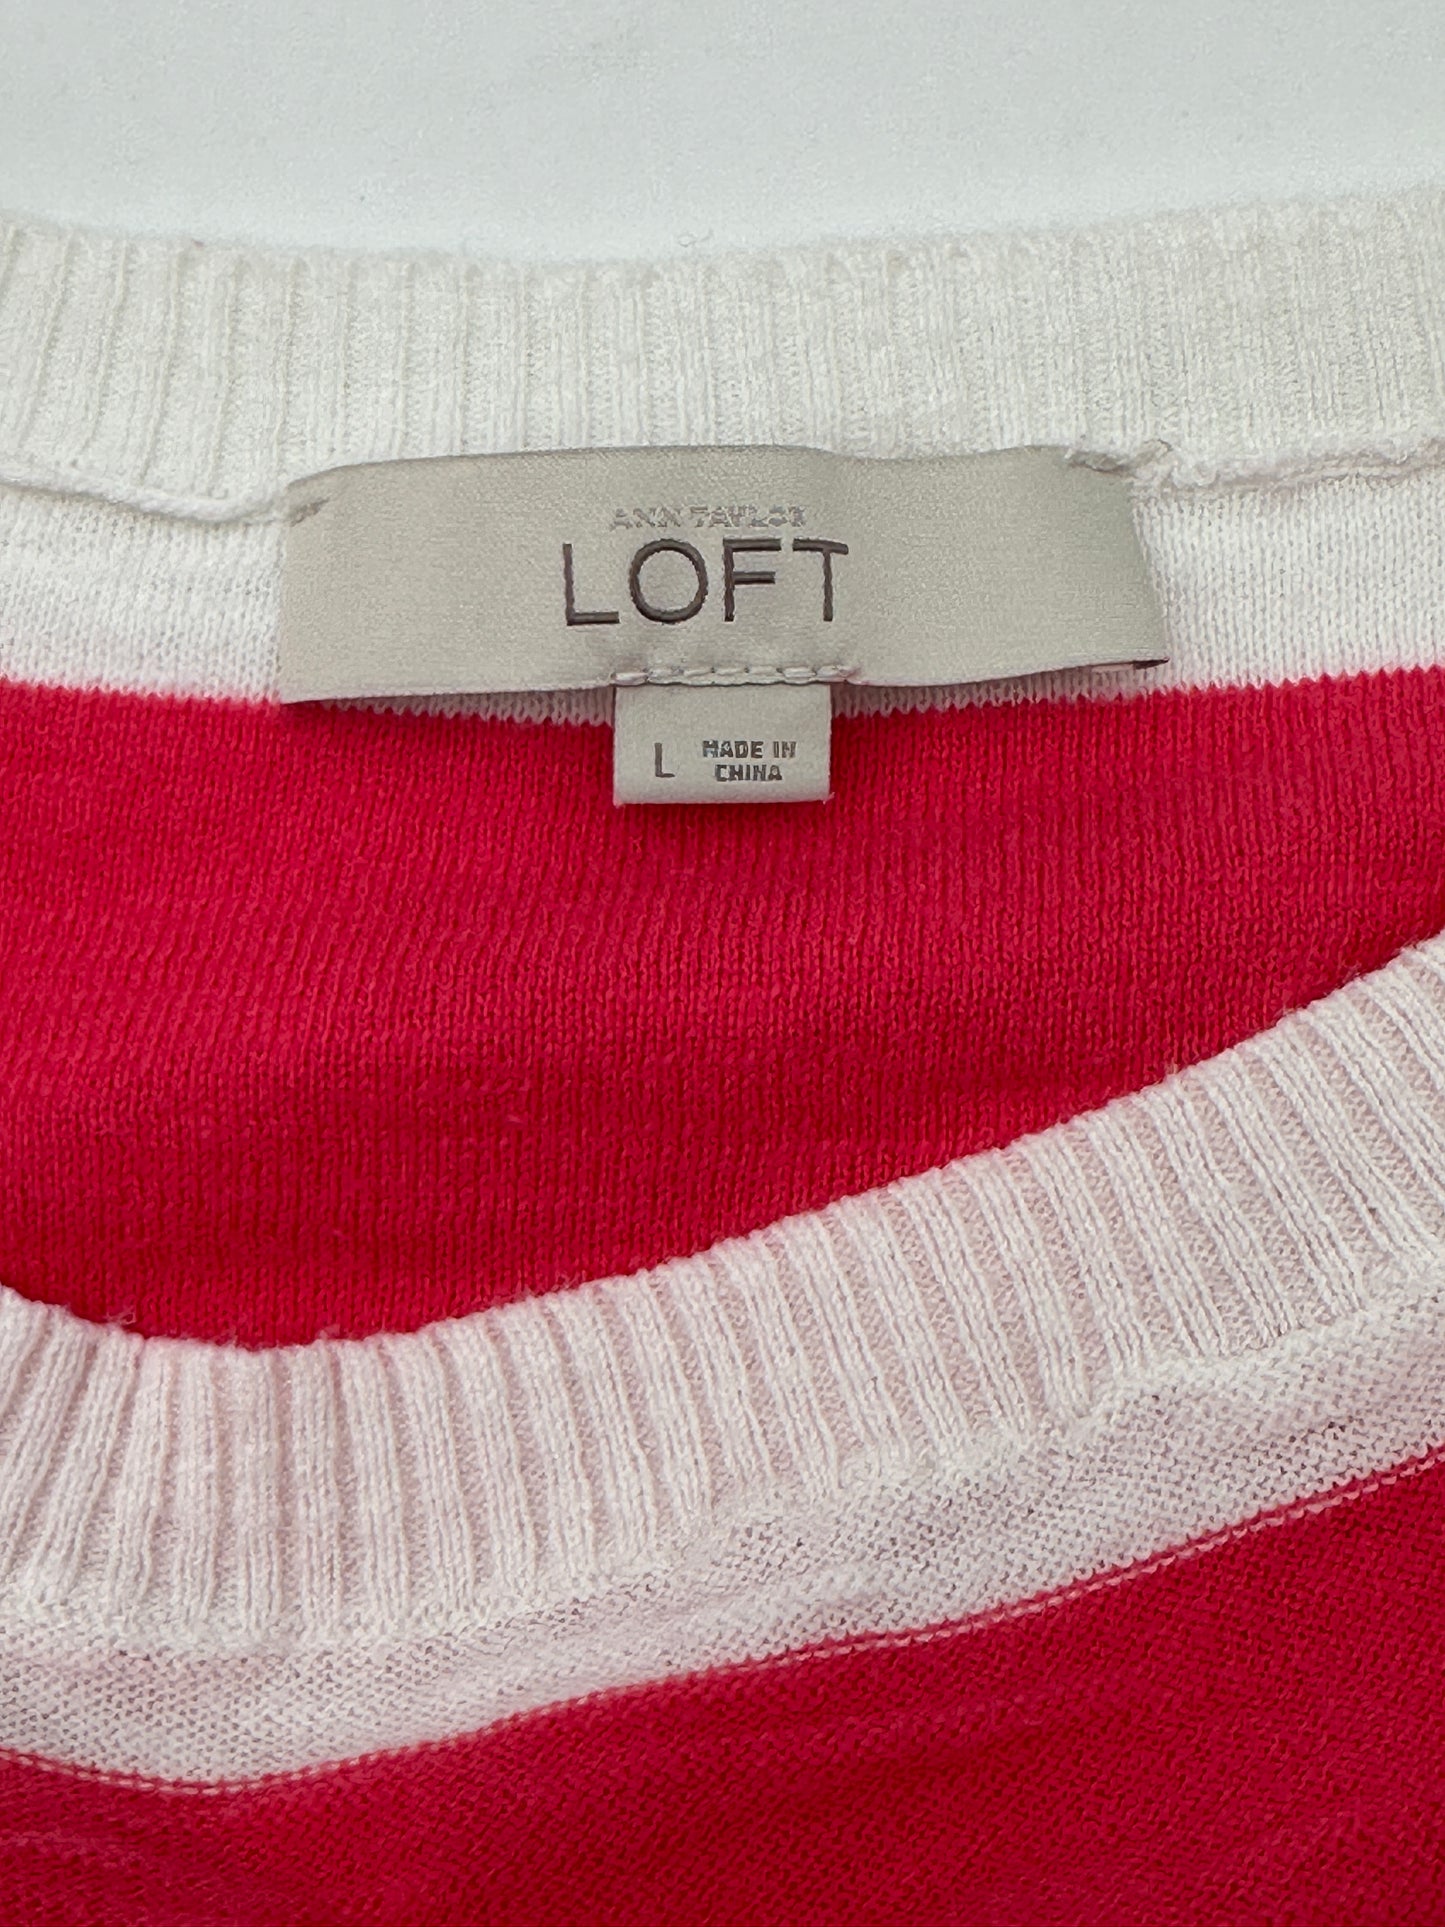 Ann Tayor LOFT Size L Dark Coral & White Striped Short Sleeve Sweater